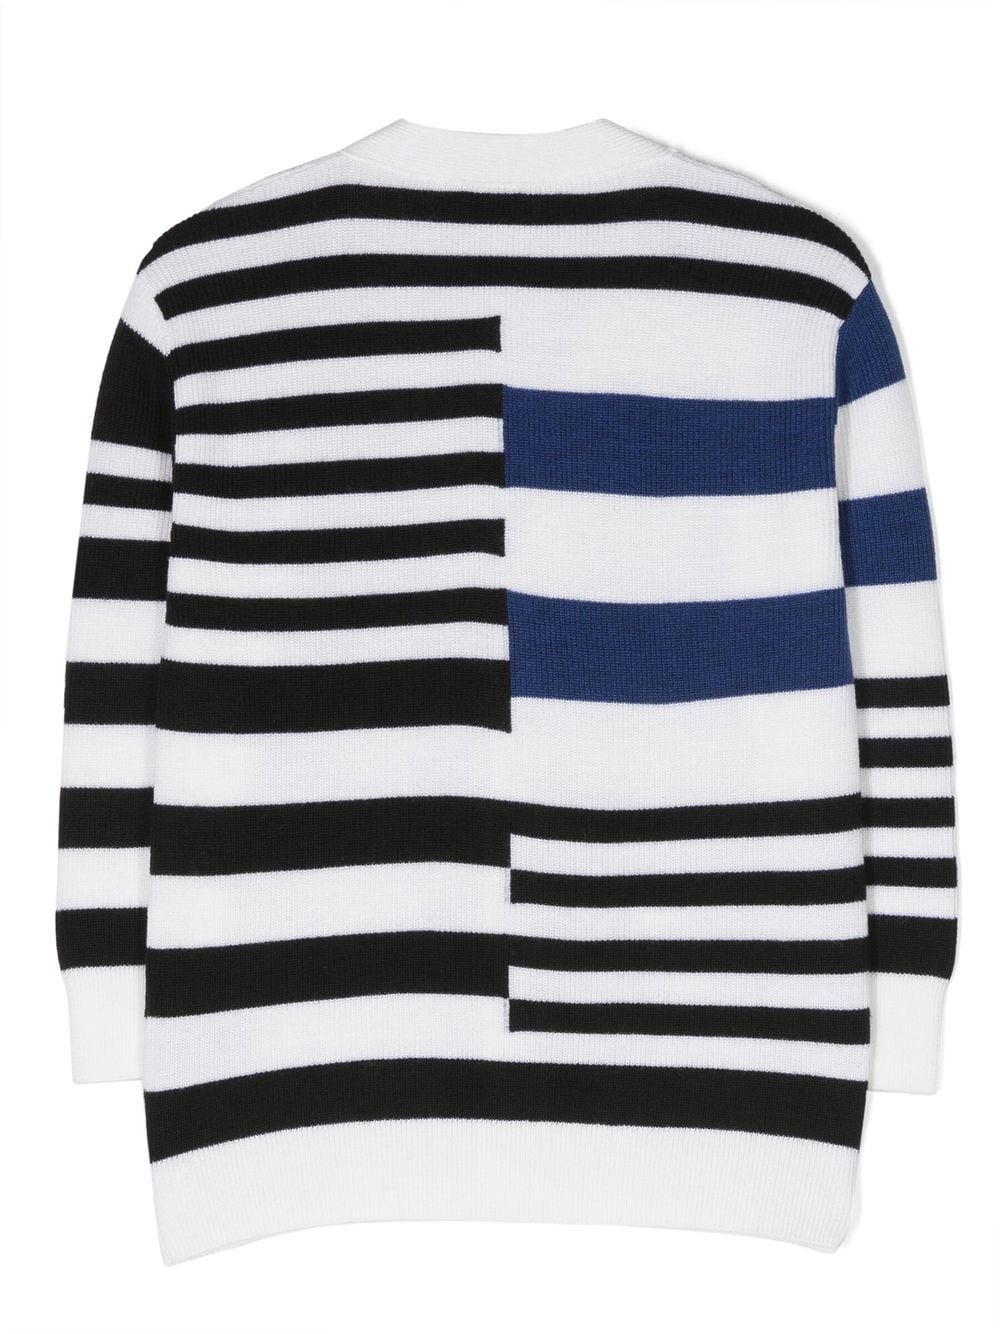 Blue/Black striped cardigan